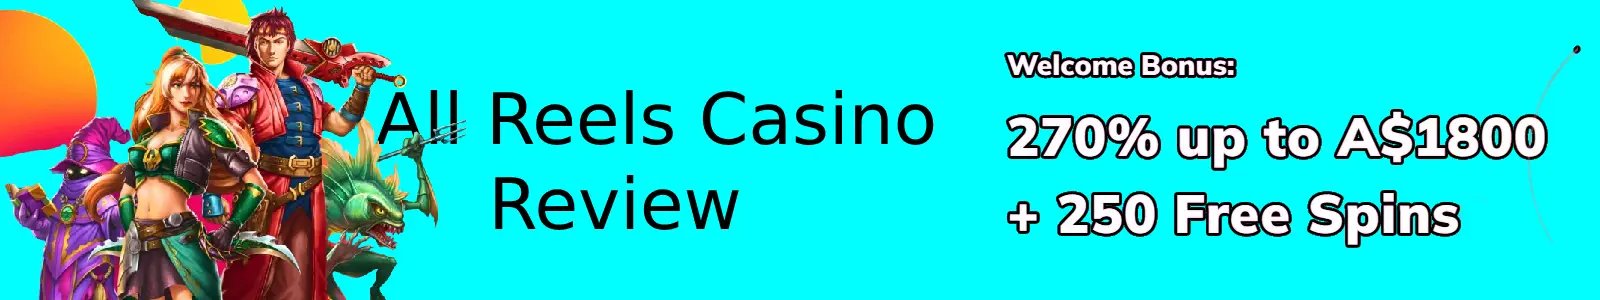 All Reels Casino Welcome Bonus